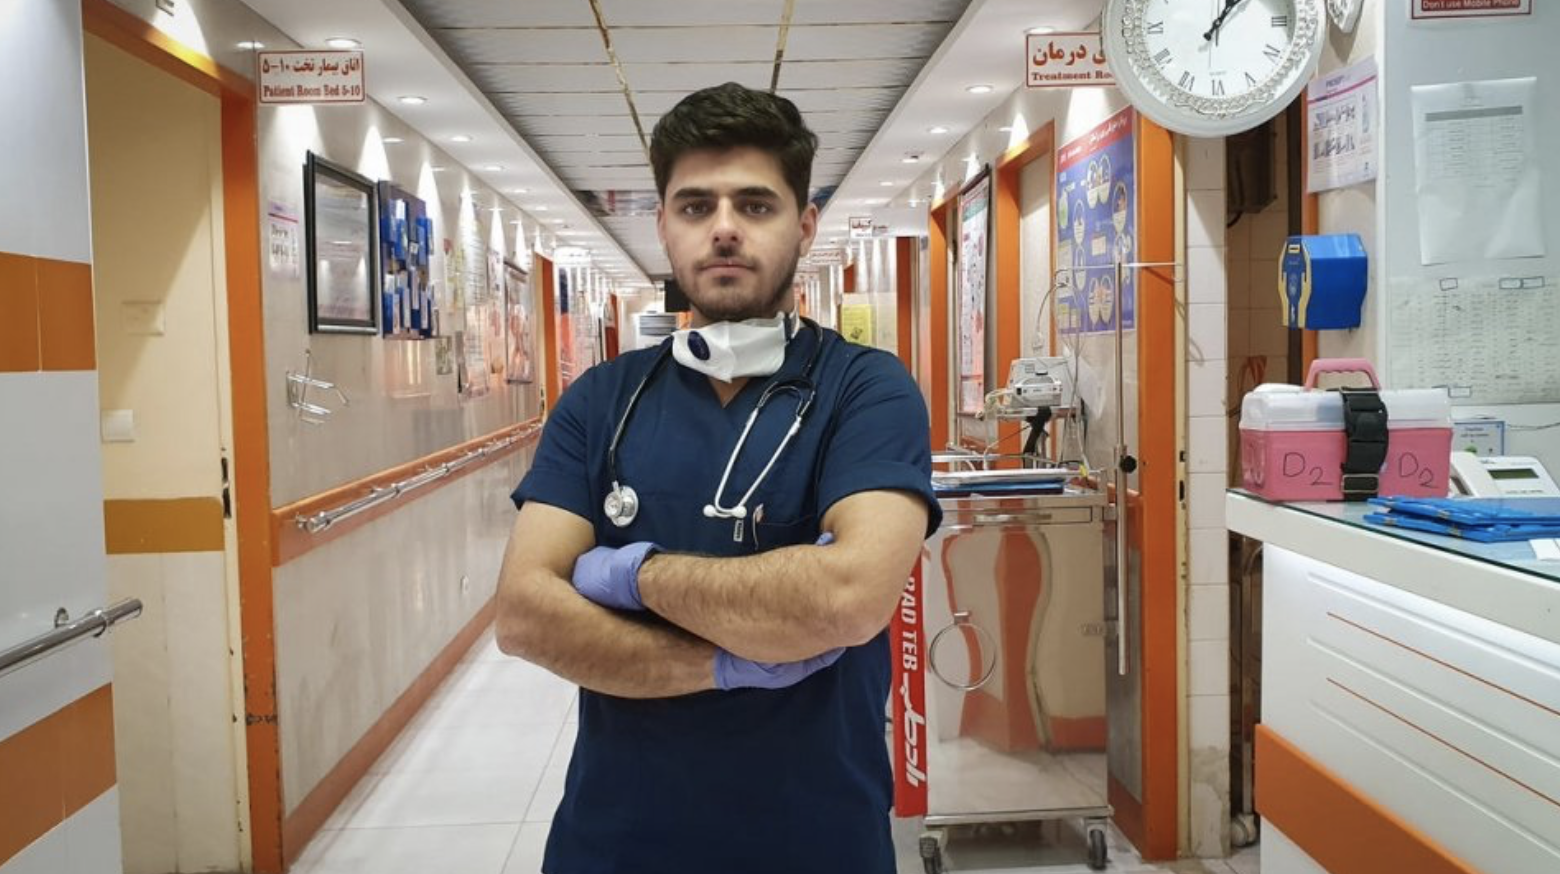 Refugee nurse Moheyman Alkhatavi, originally from Iraq, now works at the Taleghani Hospital in Abadan, Iran. (Photo courtesy UNHCR) Posted for media use